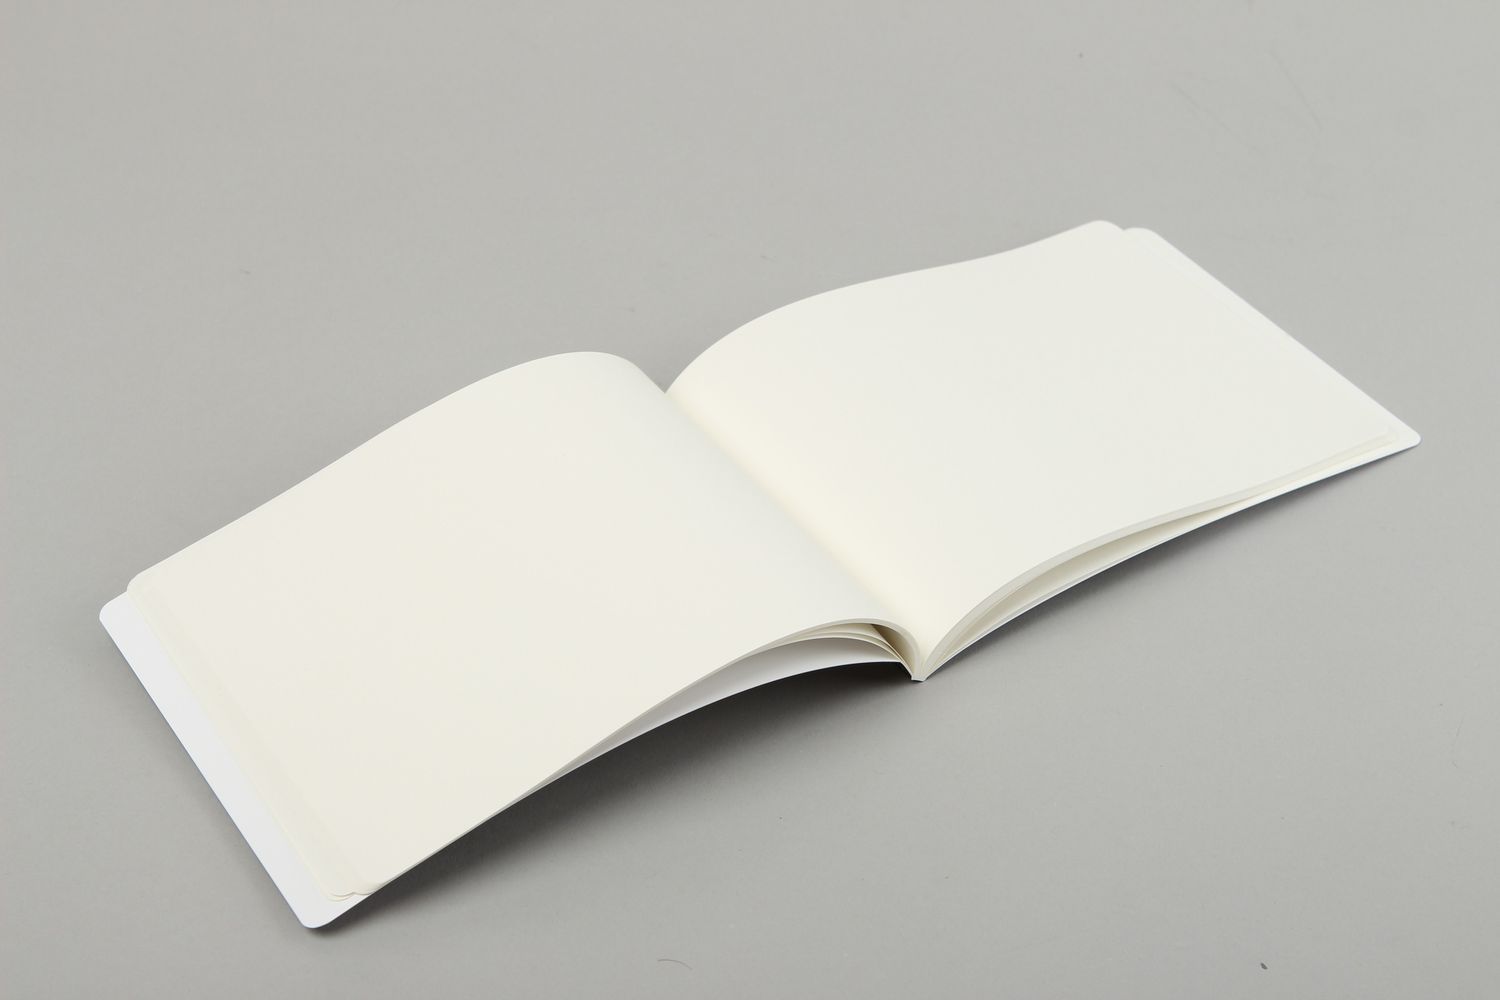 Unusual handmade sketch book sketchbook design notebook for sketches gift ideas photo 4